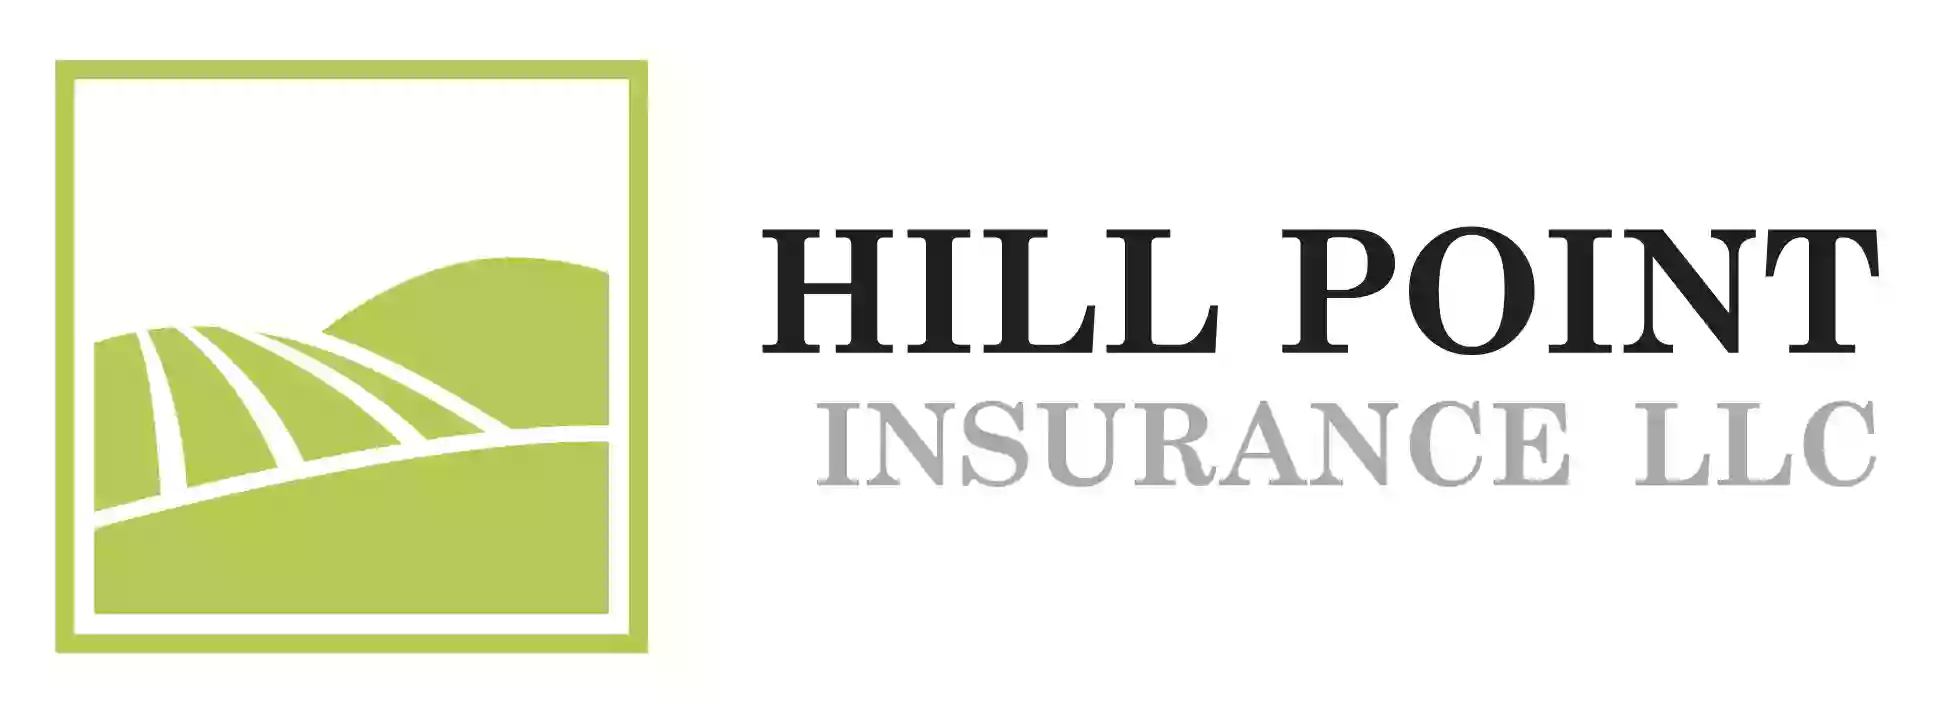 Hill Point Insurance LLC